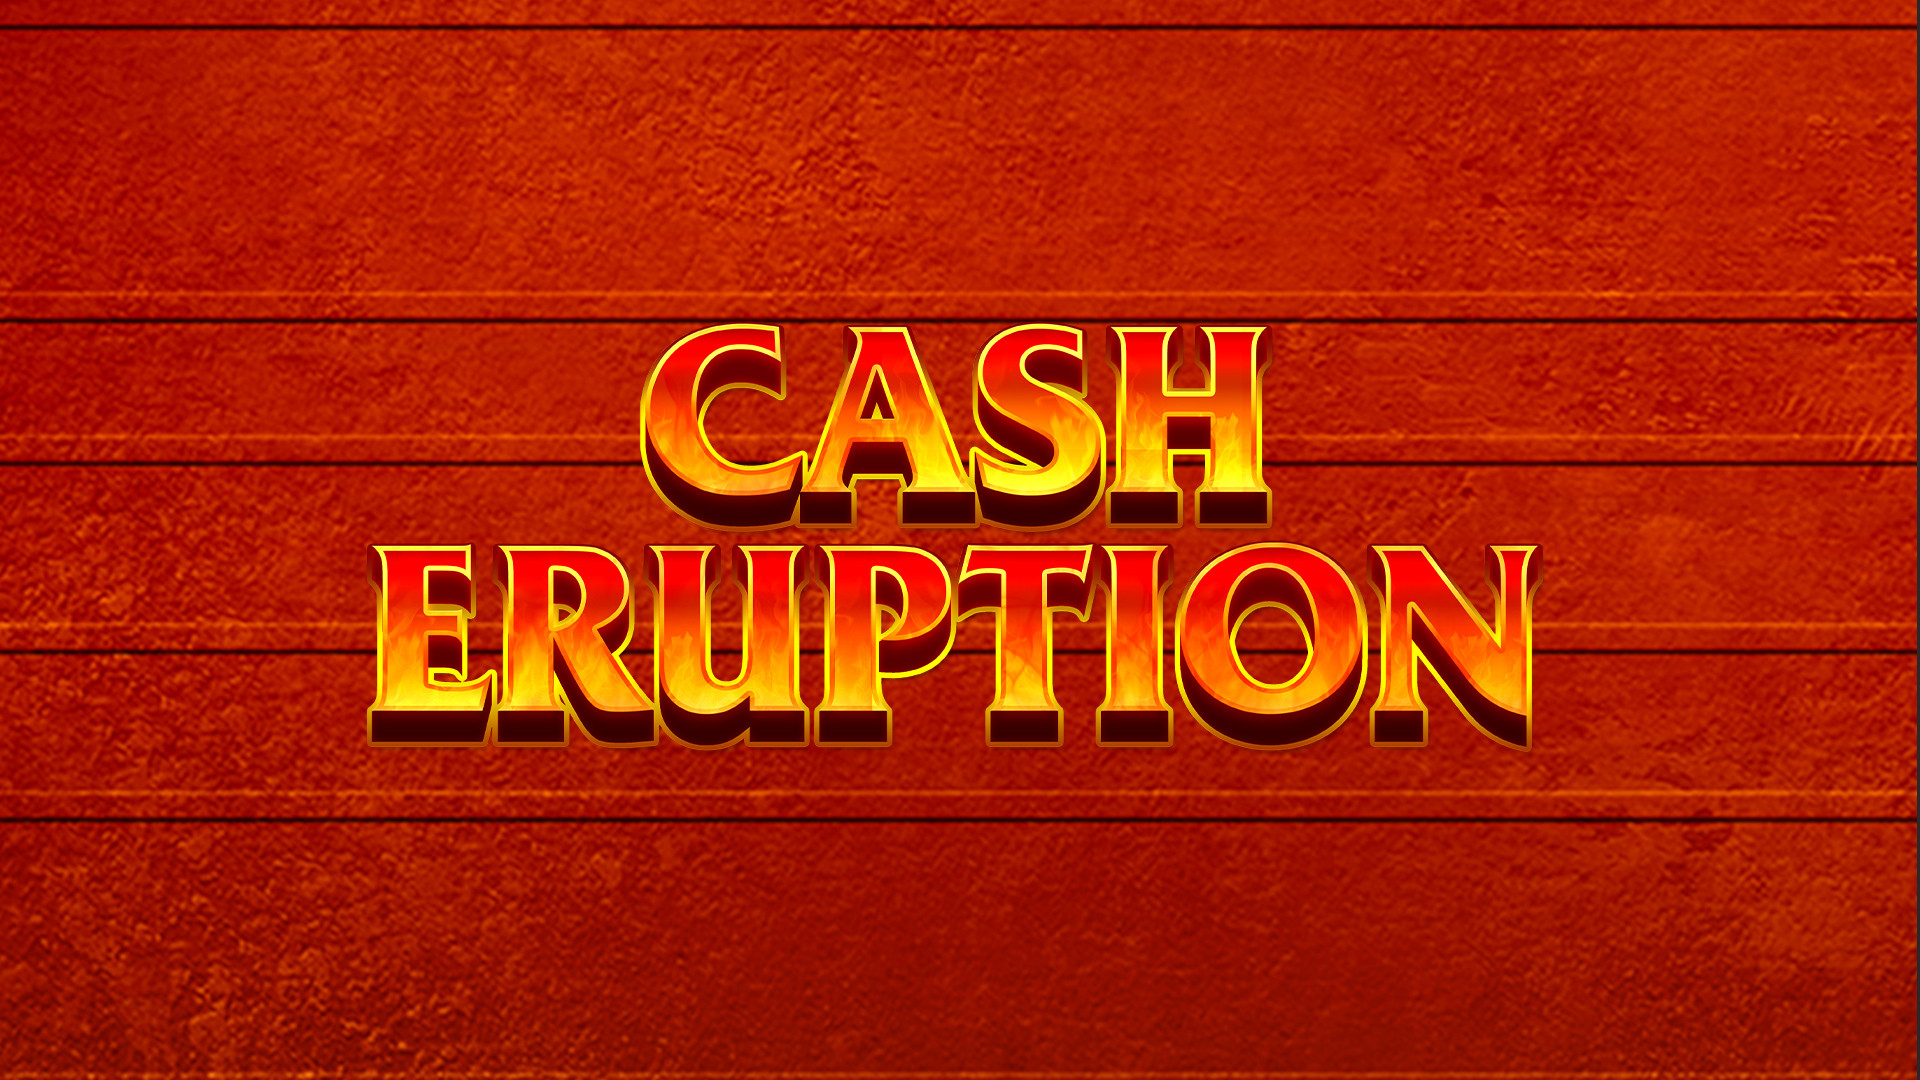 Cash Eruption